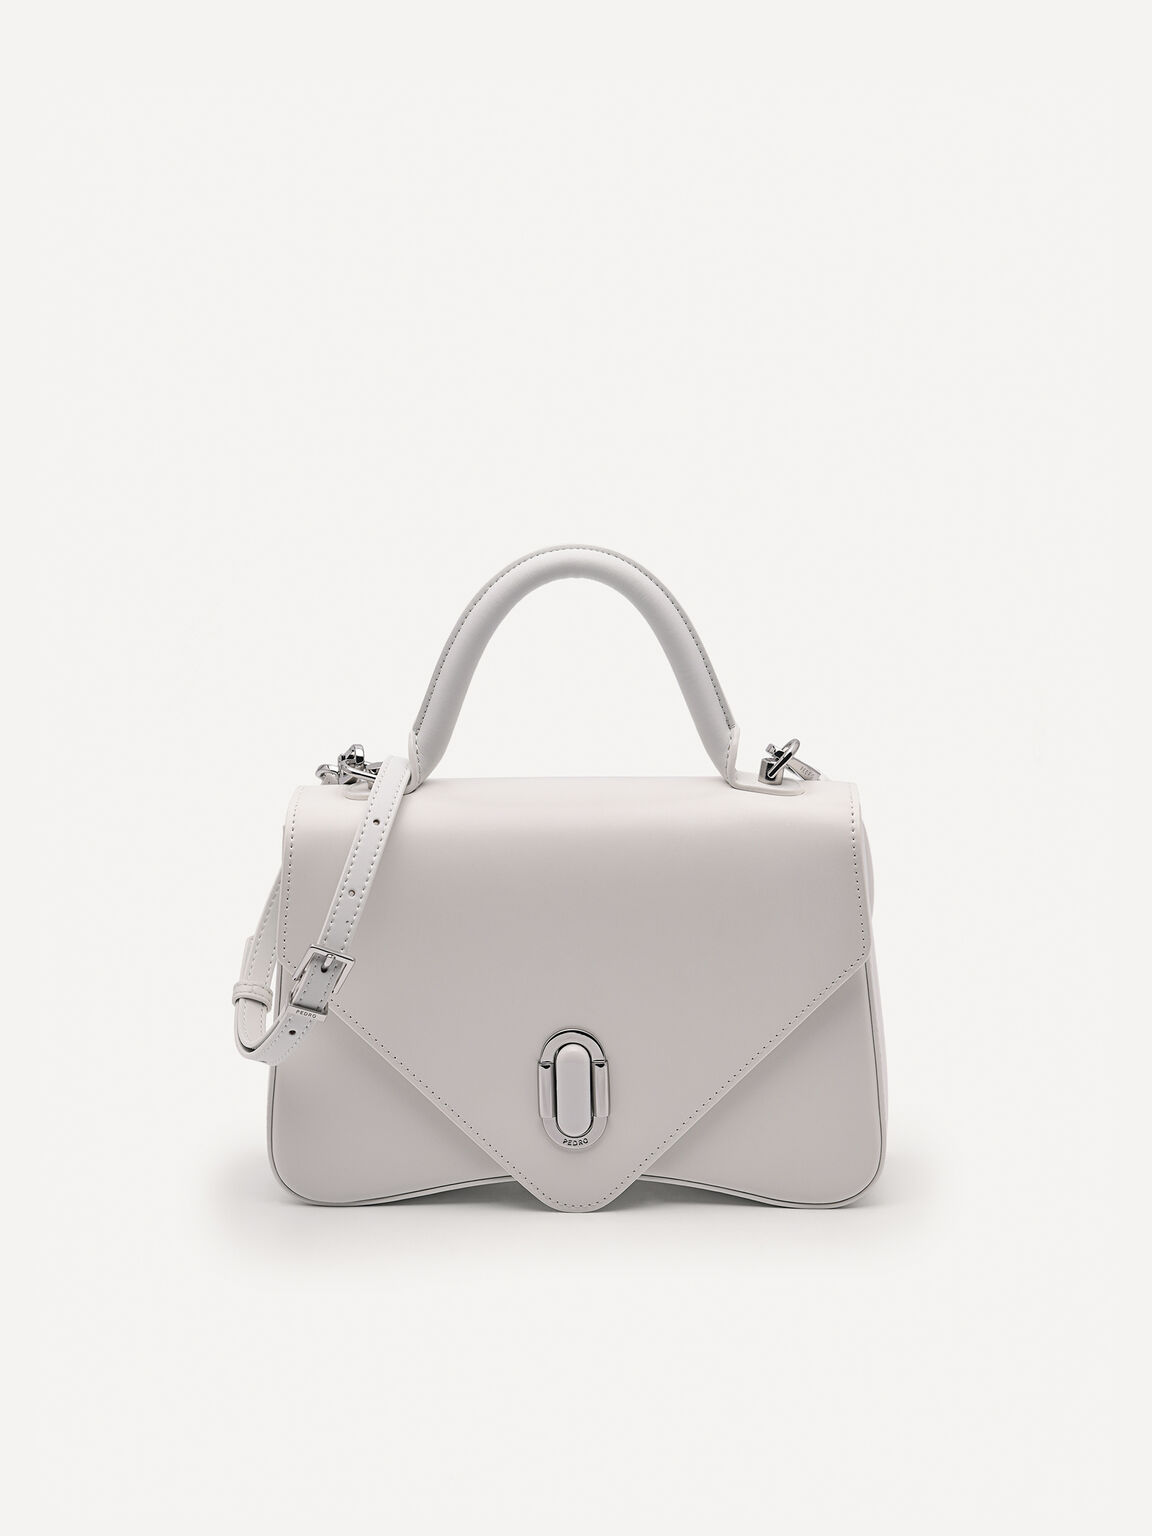 Zenith Leather Handbag, White